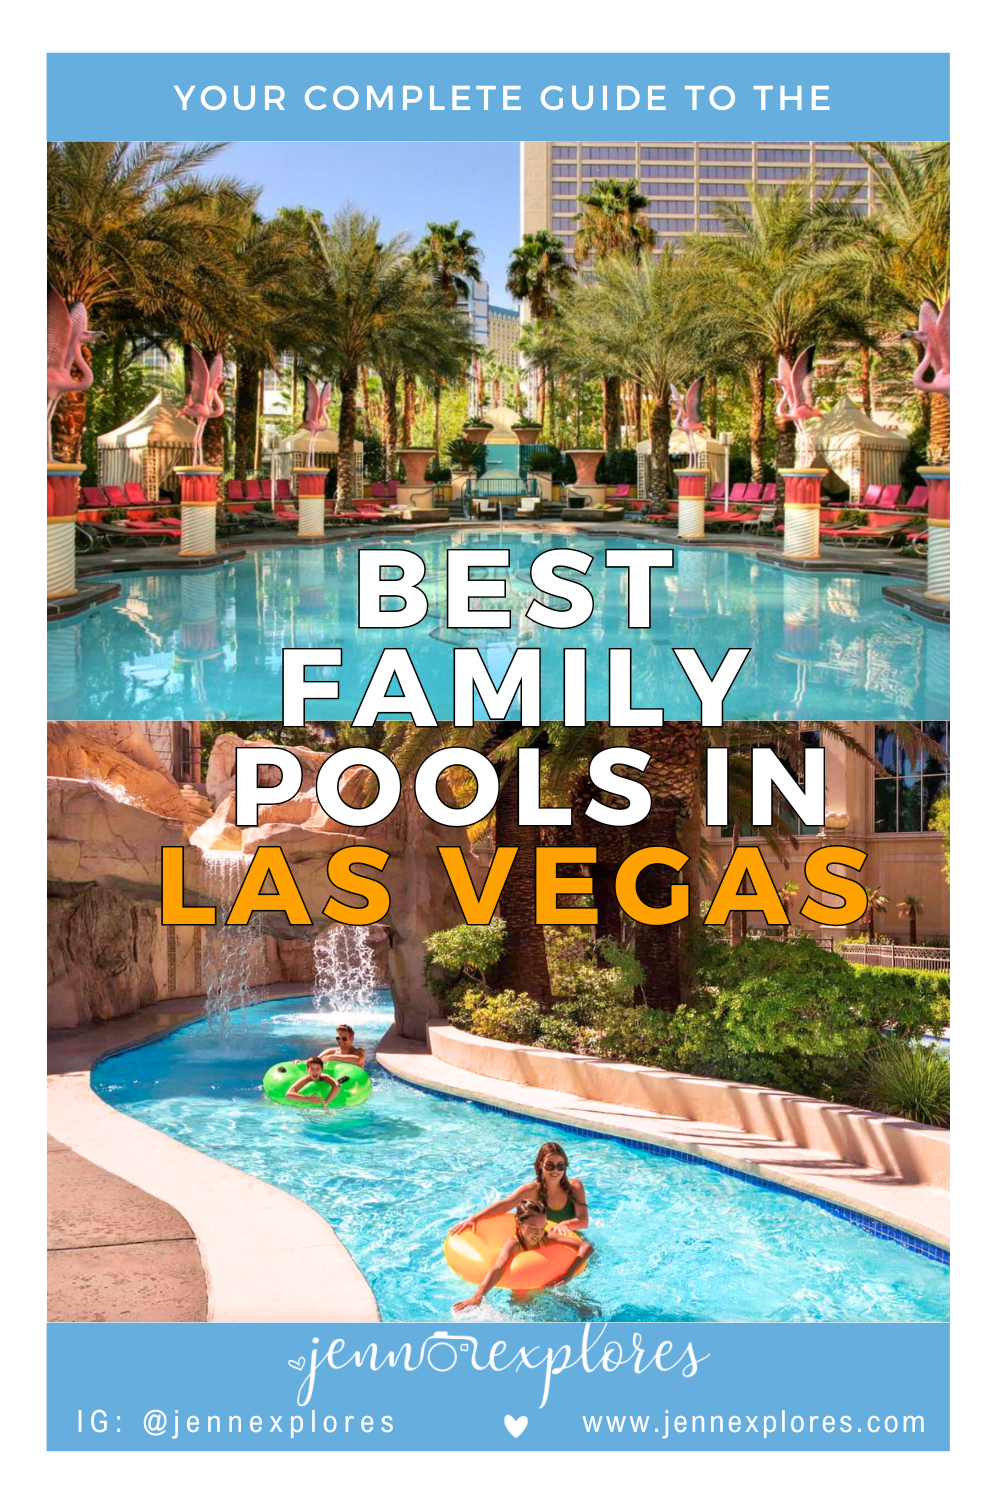 Swimming in Las Vegas, NV: The Top 4 Swimming Pools in Las Vegas